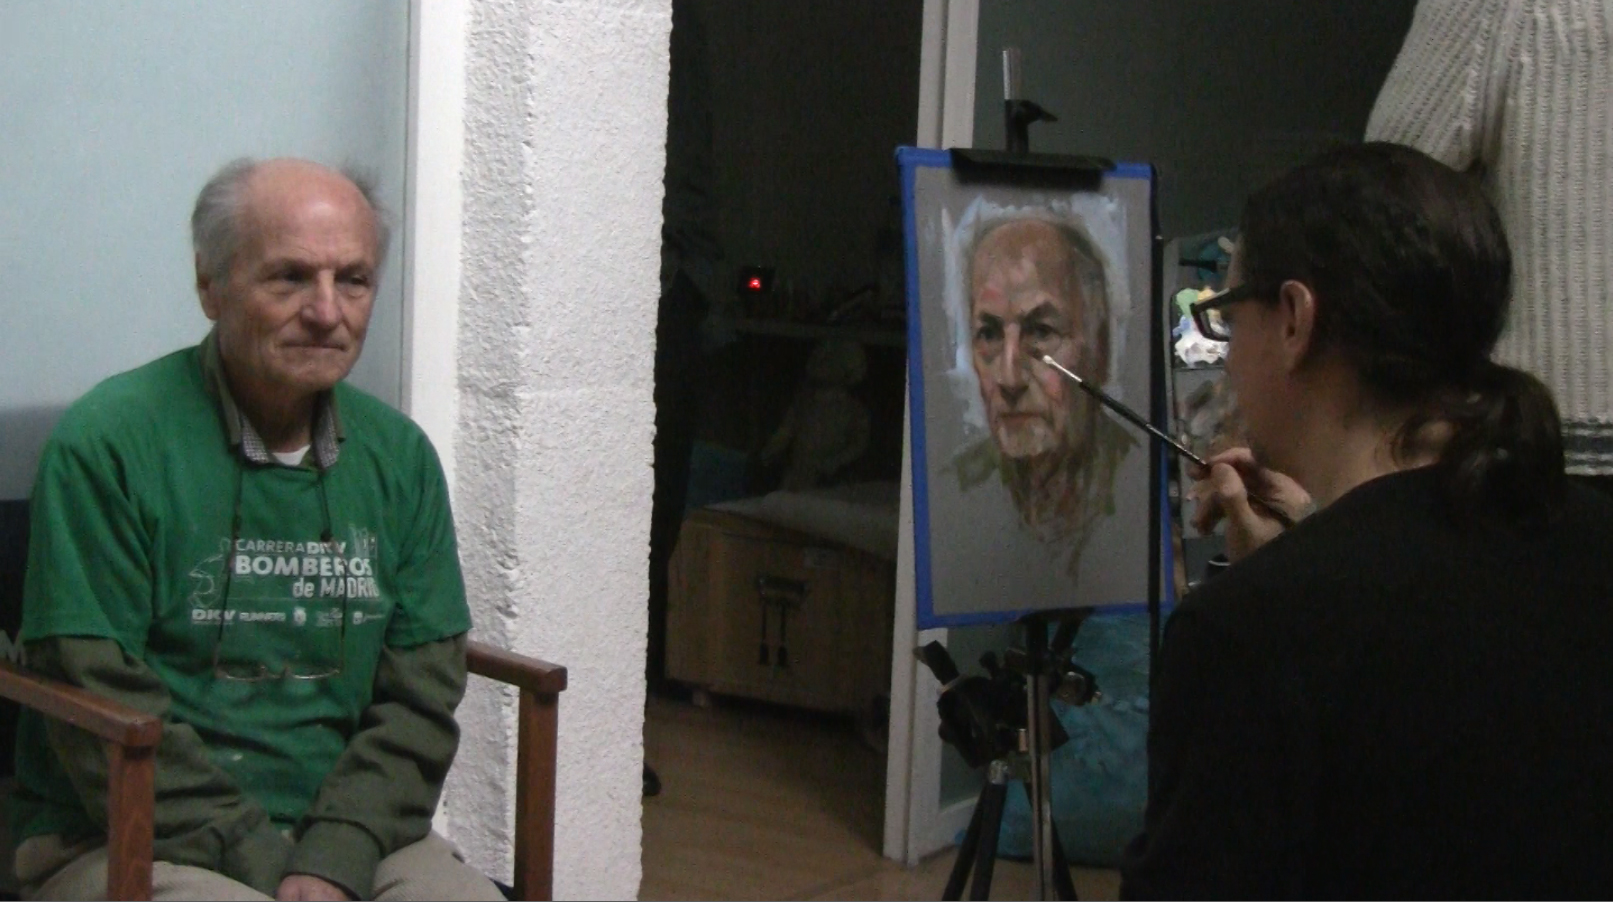 Antonio López García, sitting for a portrait painting by David Kassan